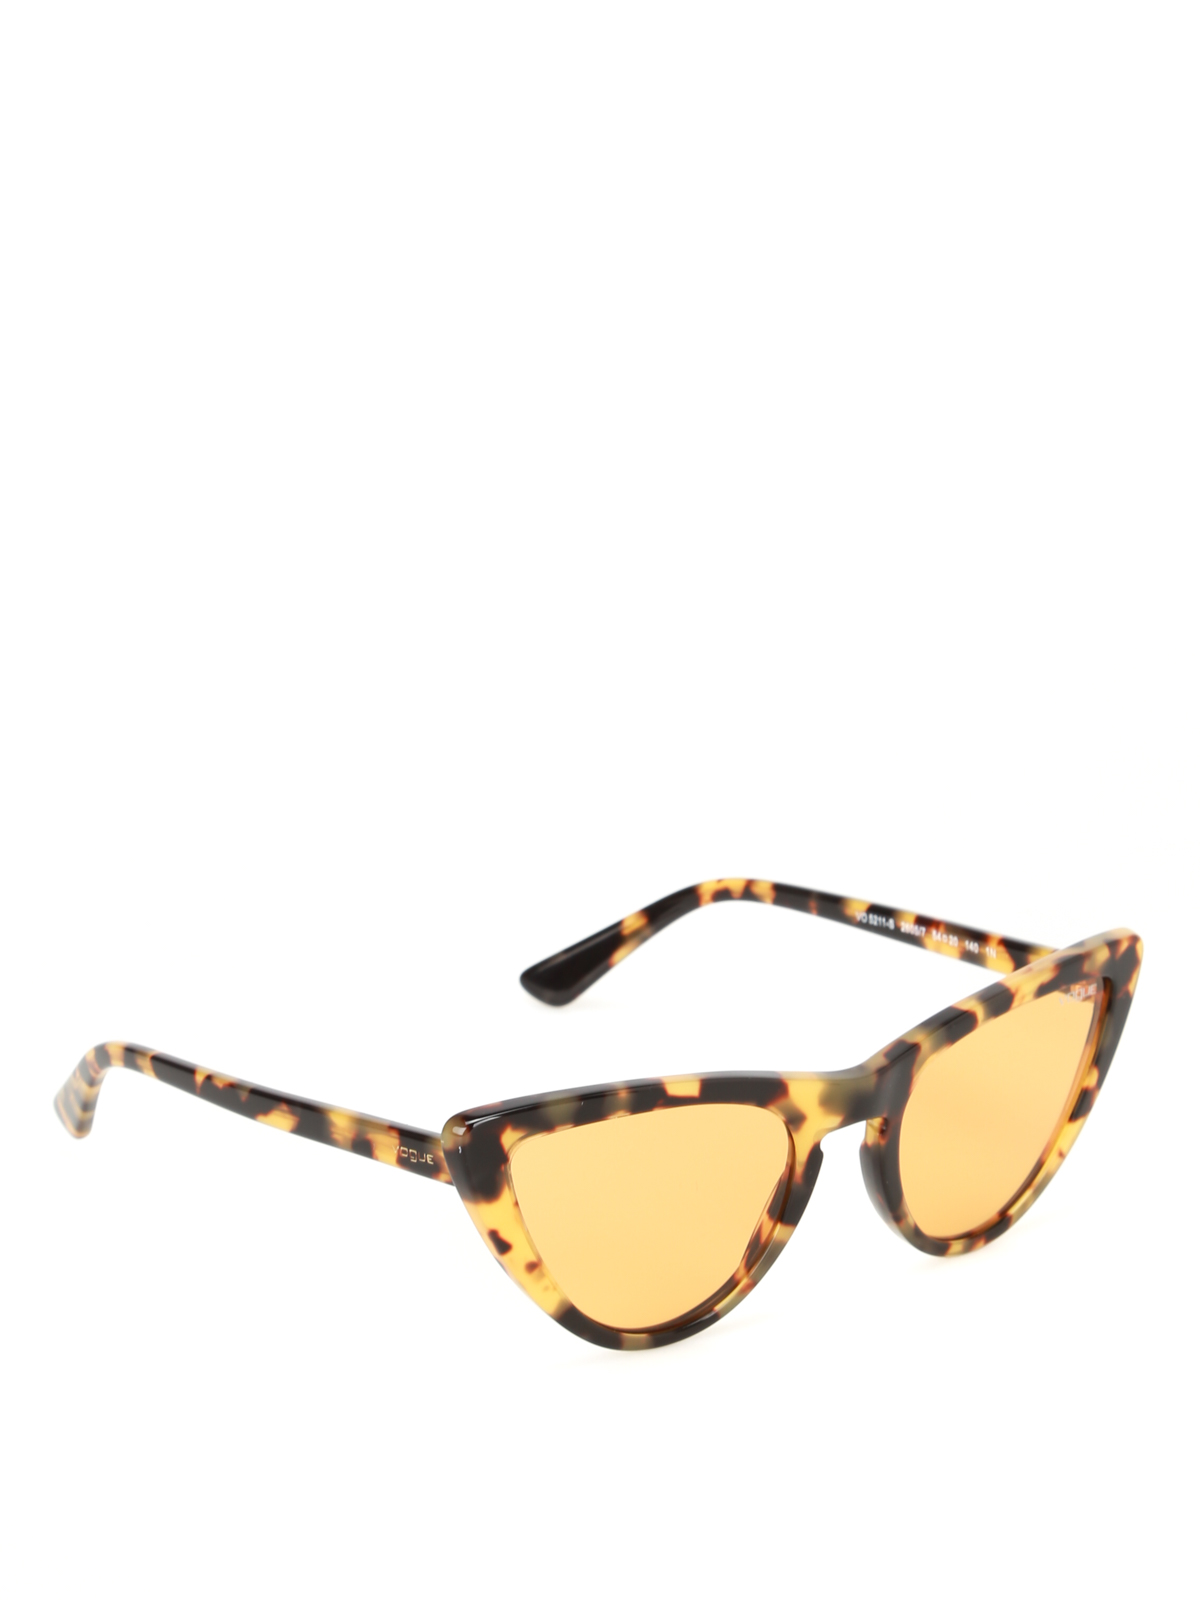 Vogue Gigi Hadid Havana Sunglasses In Light Brown